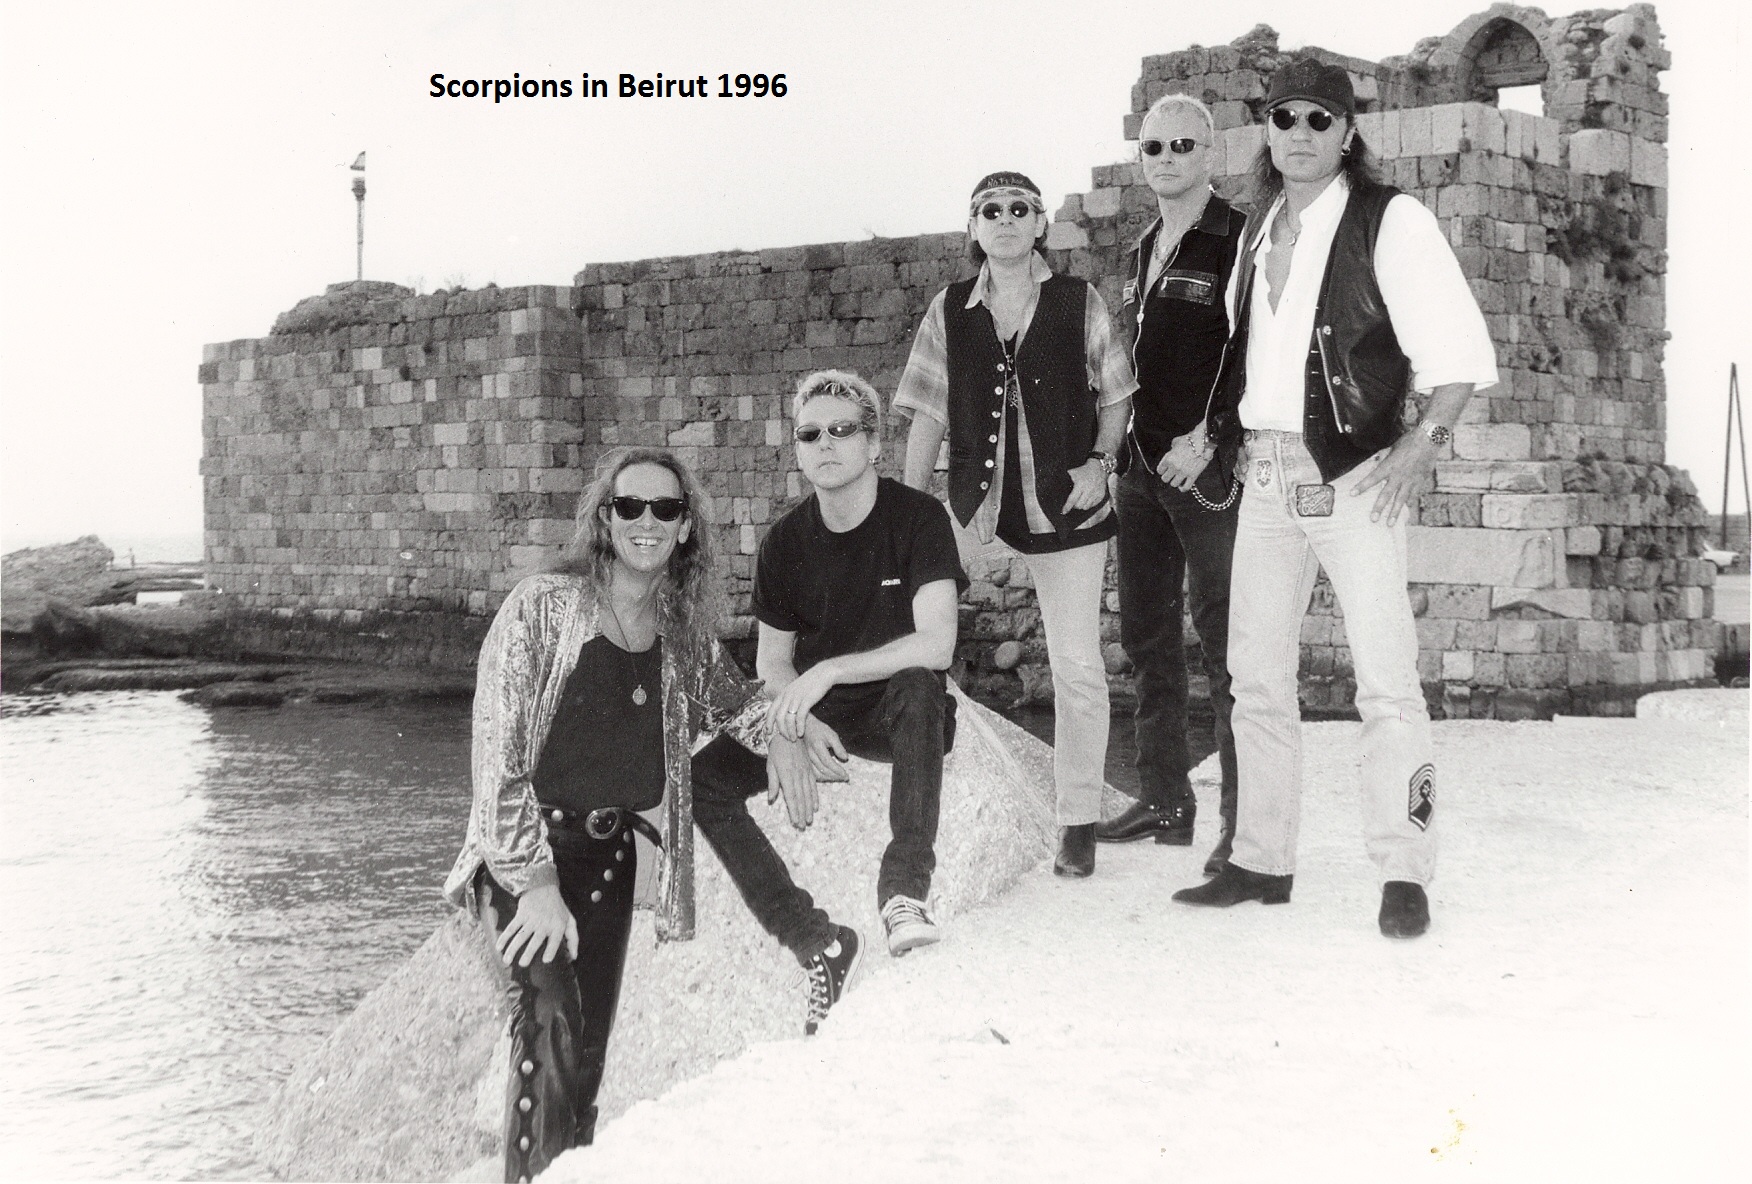 Ralph Rieckermann with Scorpions in Beirut 1996